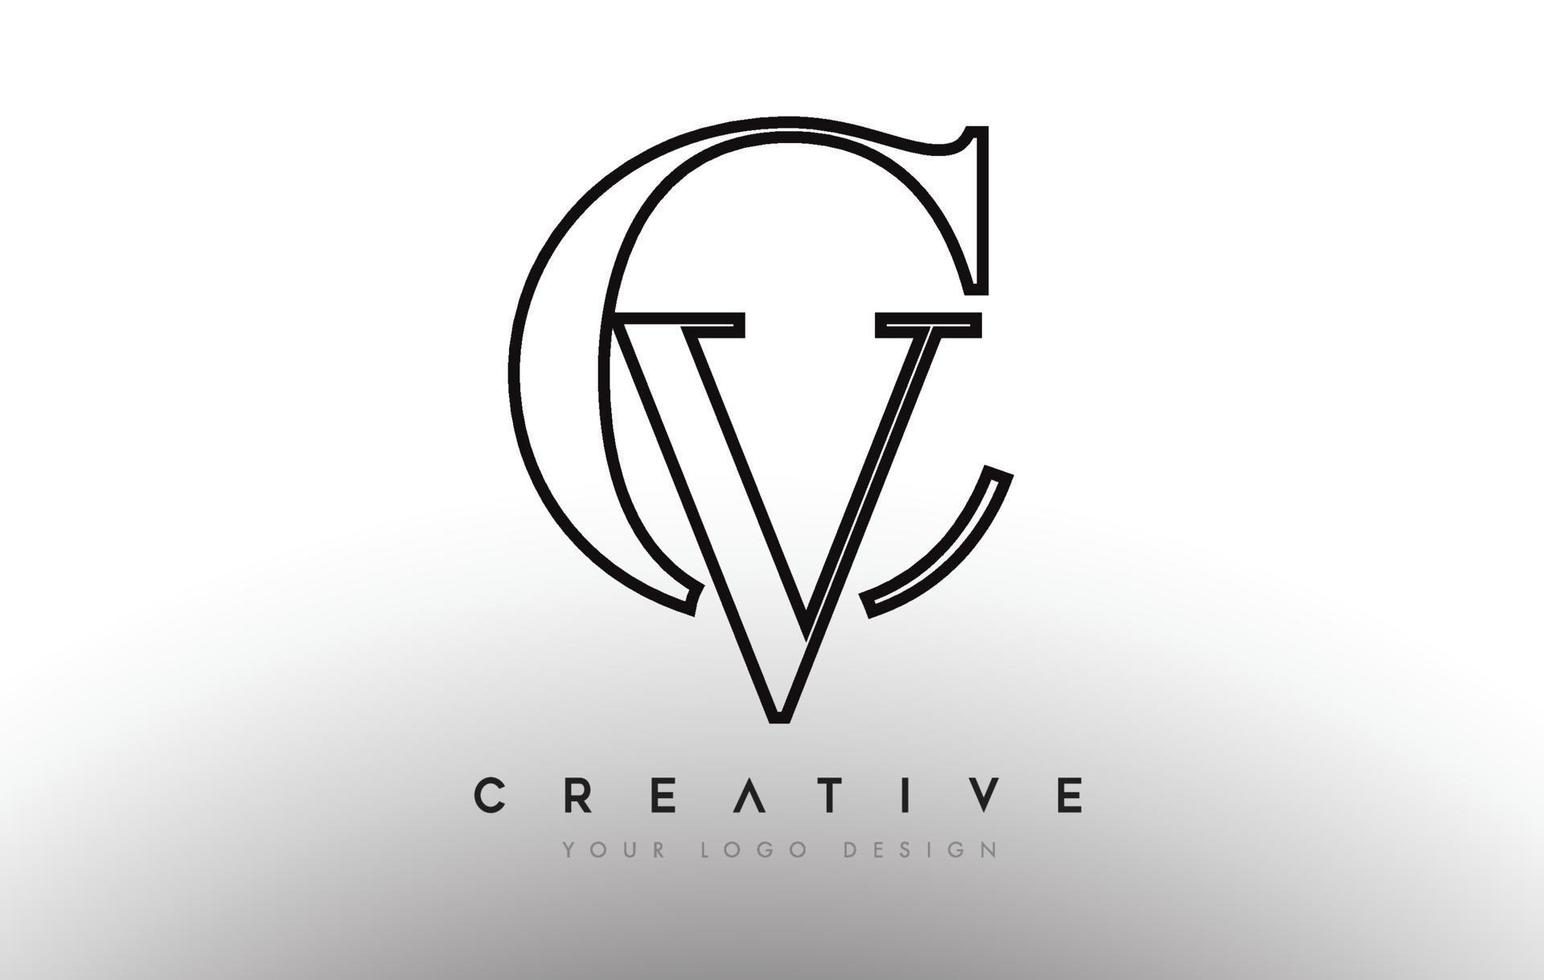 cv cv brief ontwerp logo logo pictogram concept met serif-lettertype en klassieke elegante stijl look vector